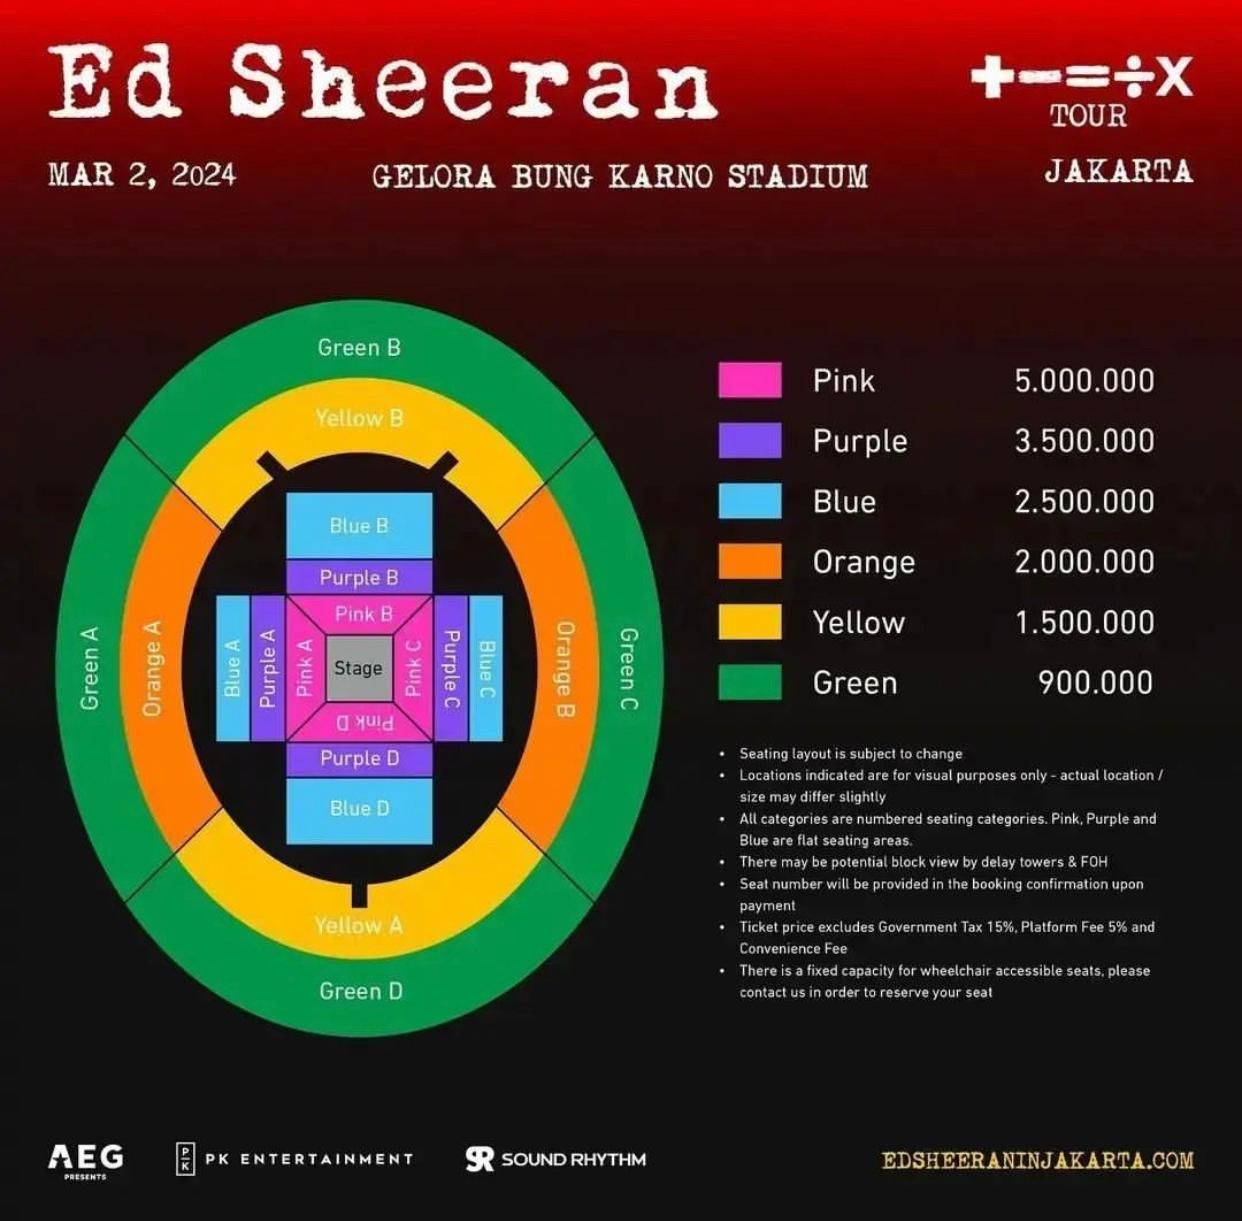 Ilustrasi Harga dan Podium Tiket Konser Ed Sheeran Jakarta 2024